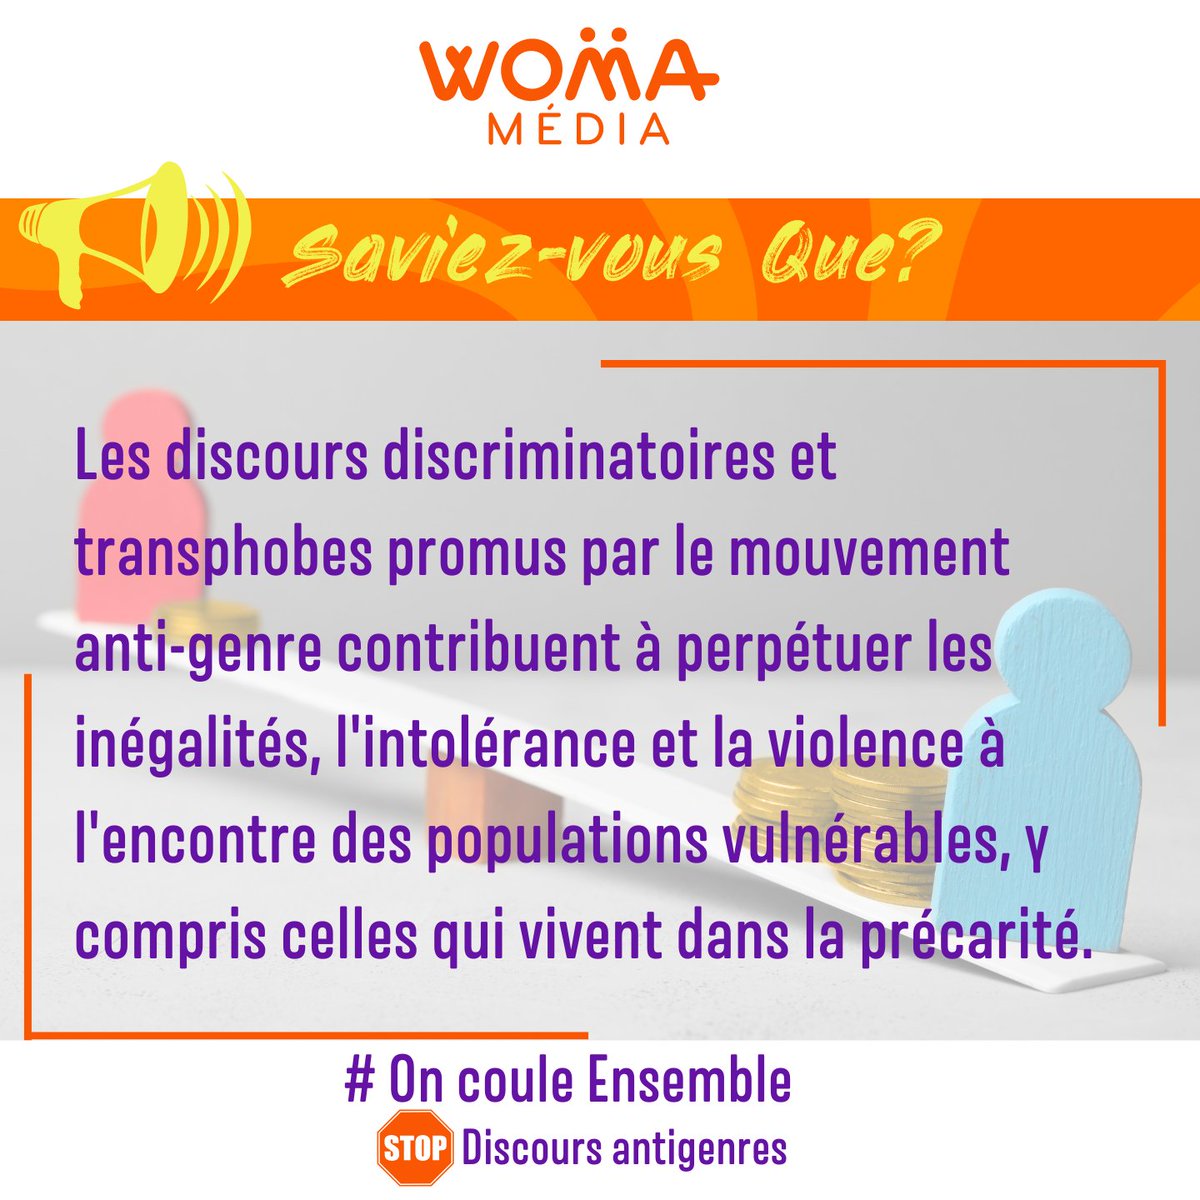 #womamedia
#lbtq
#visibilitelesbienne
#LeSaviezVous
#stopdiscoursantigenre